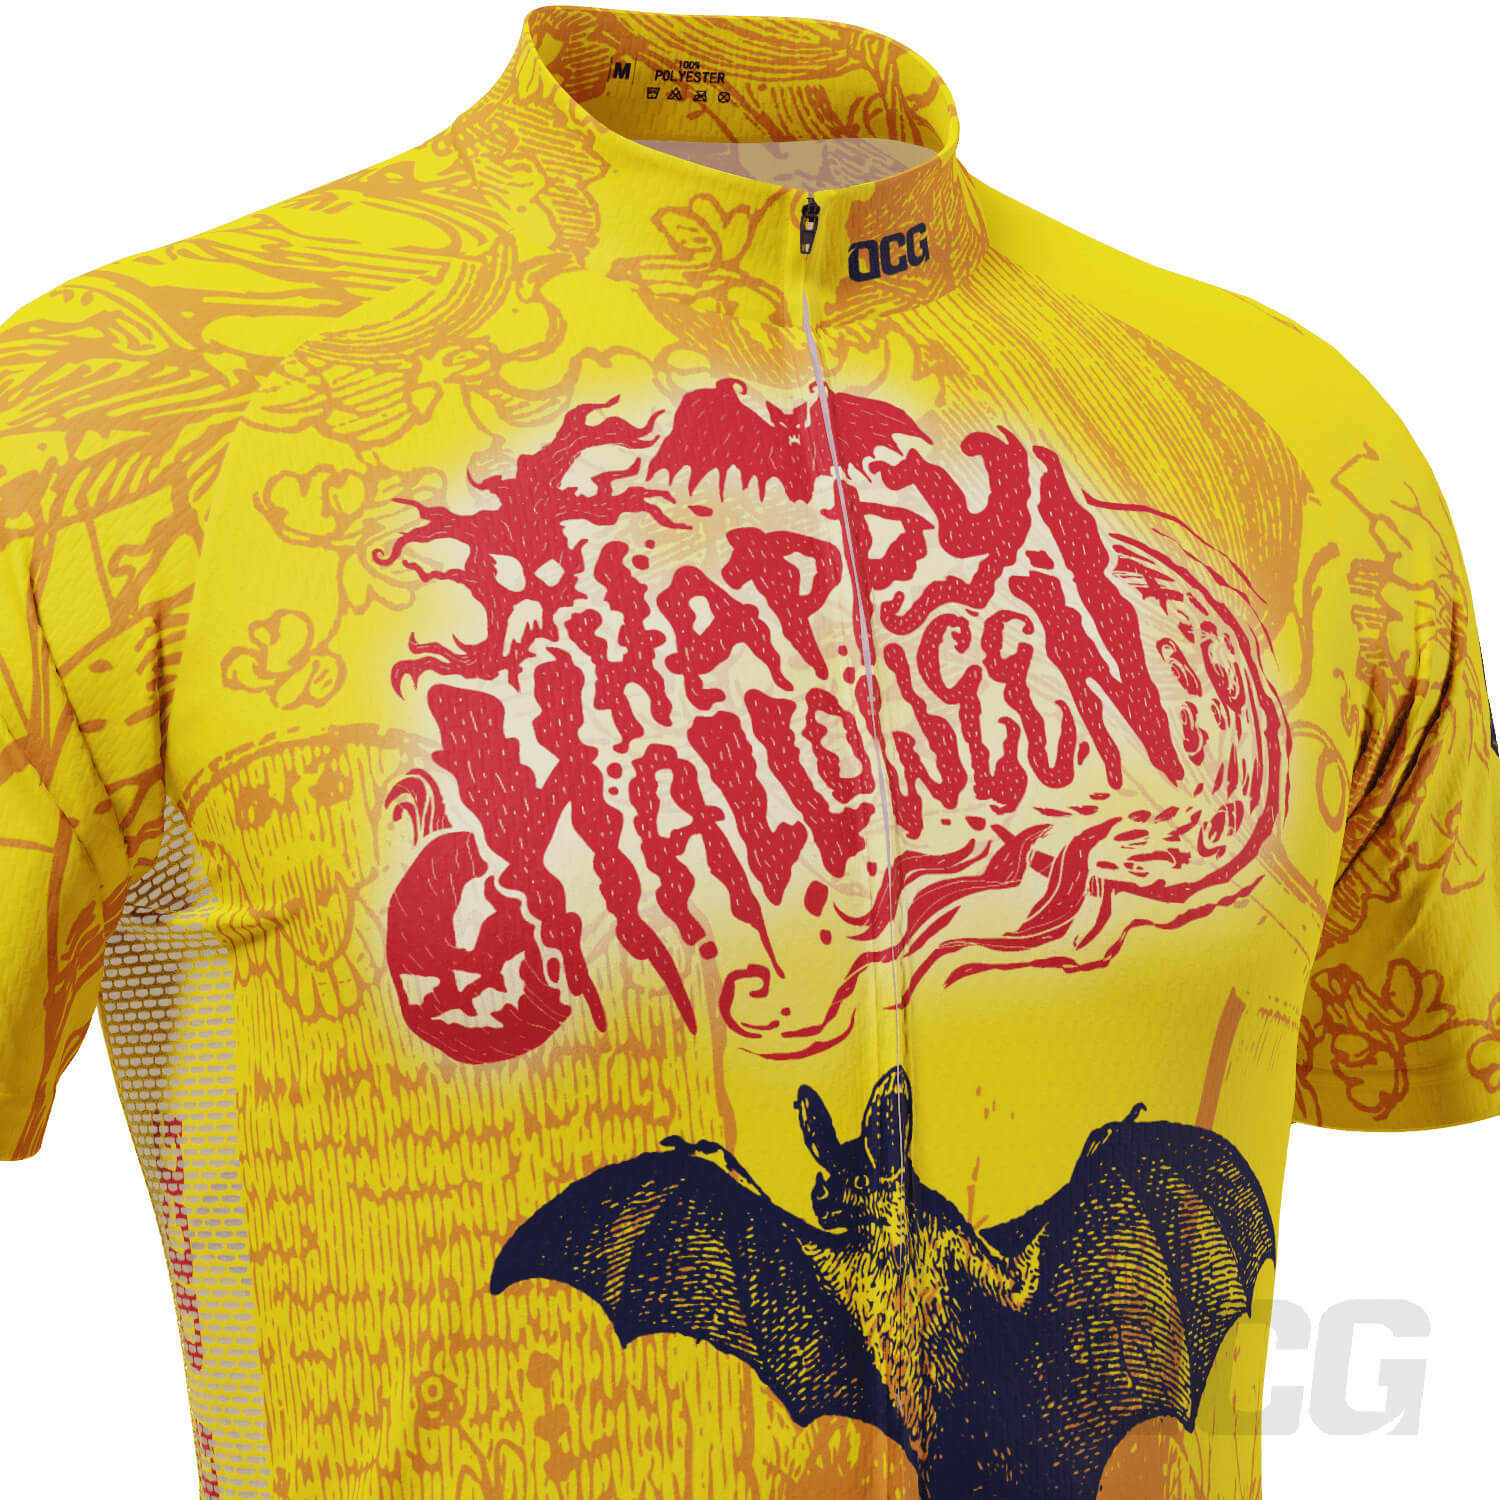 Men's Happy Halloween Short Sleeve Cycling Jersey